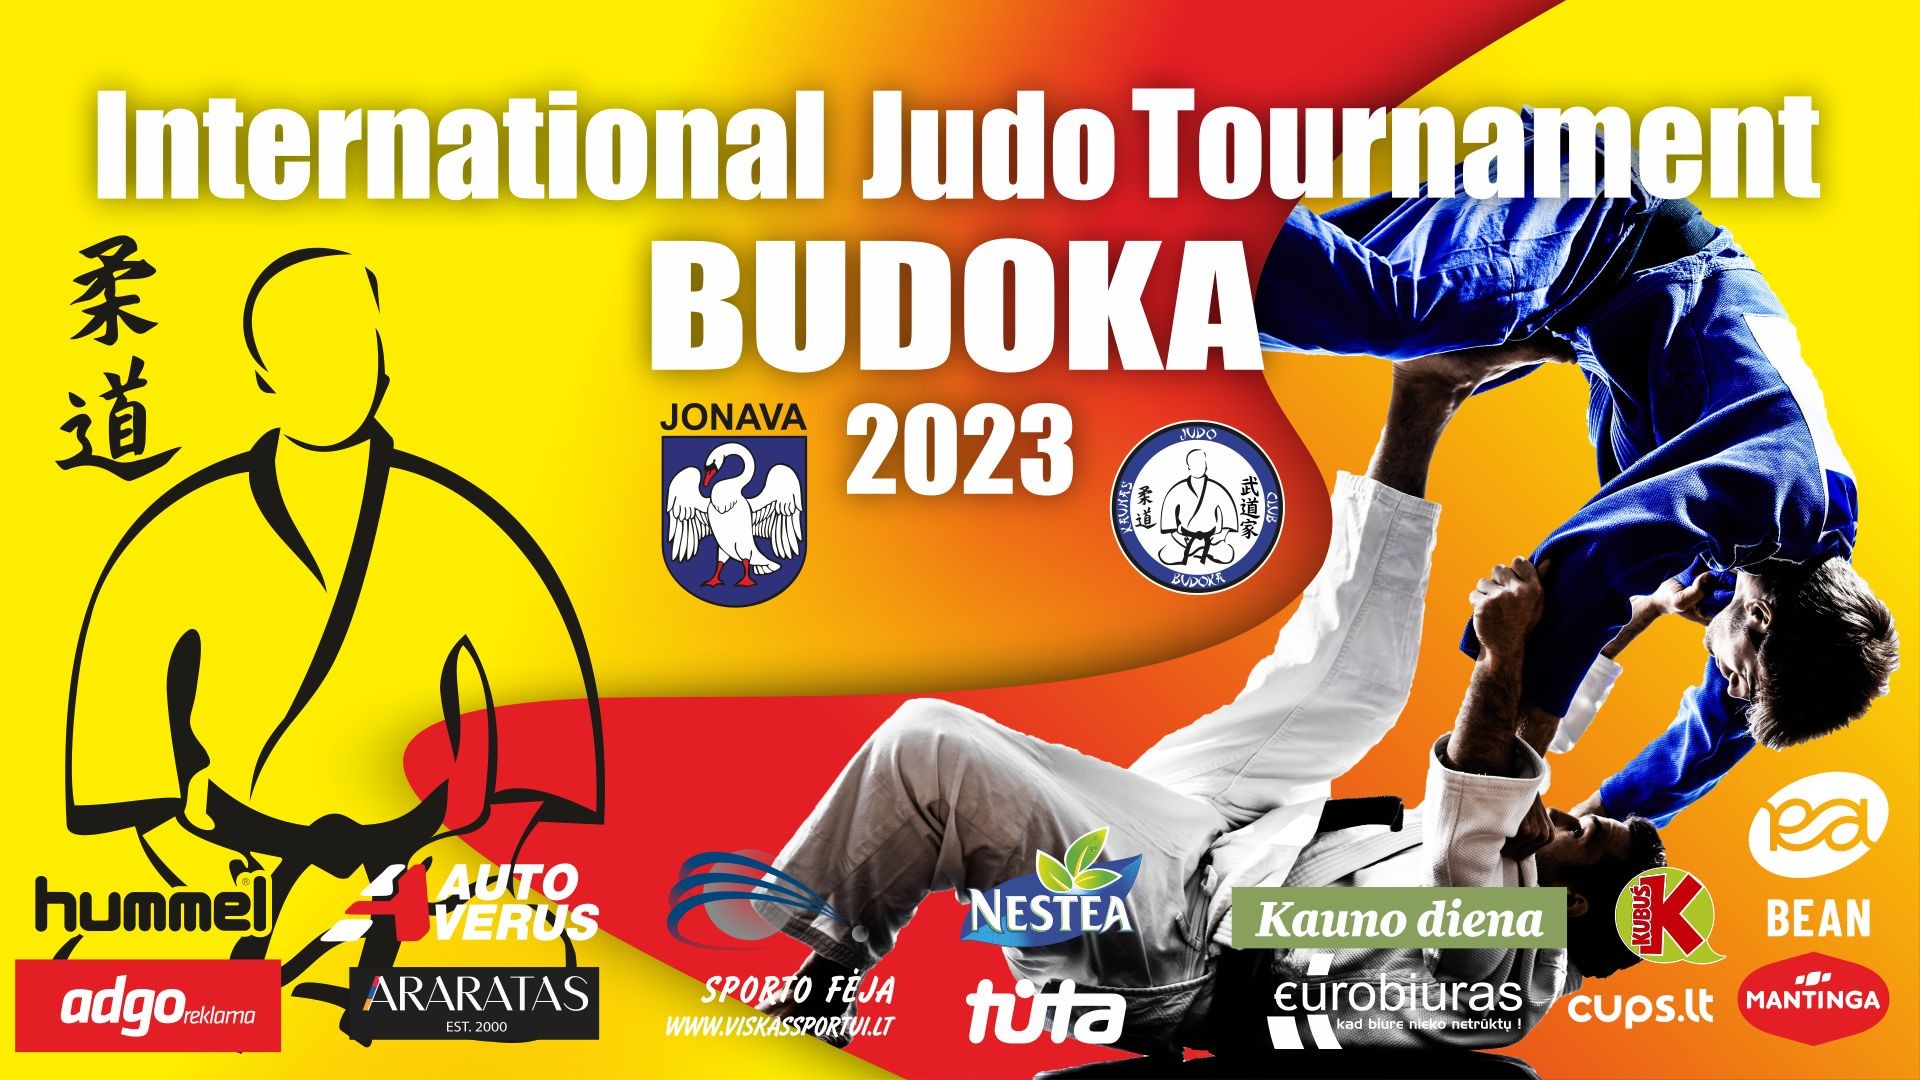 Tatami 4 - INTERNATIONAL JUDO CLUB BUDOKA TOURNAMENT 2023